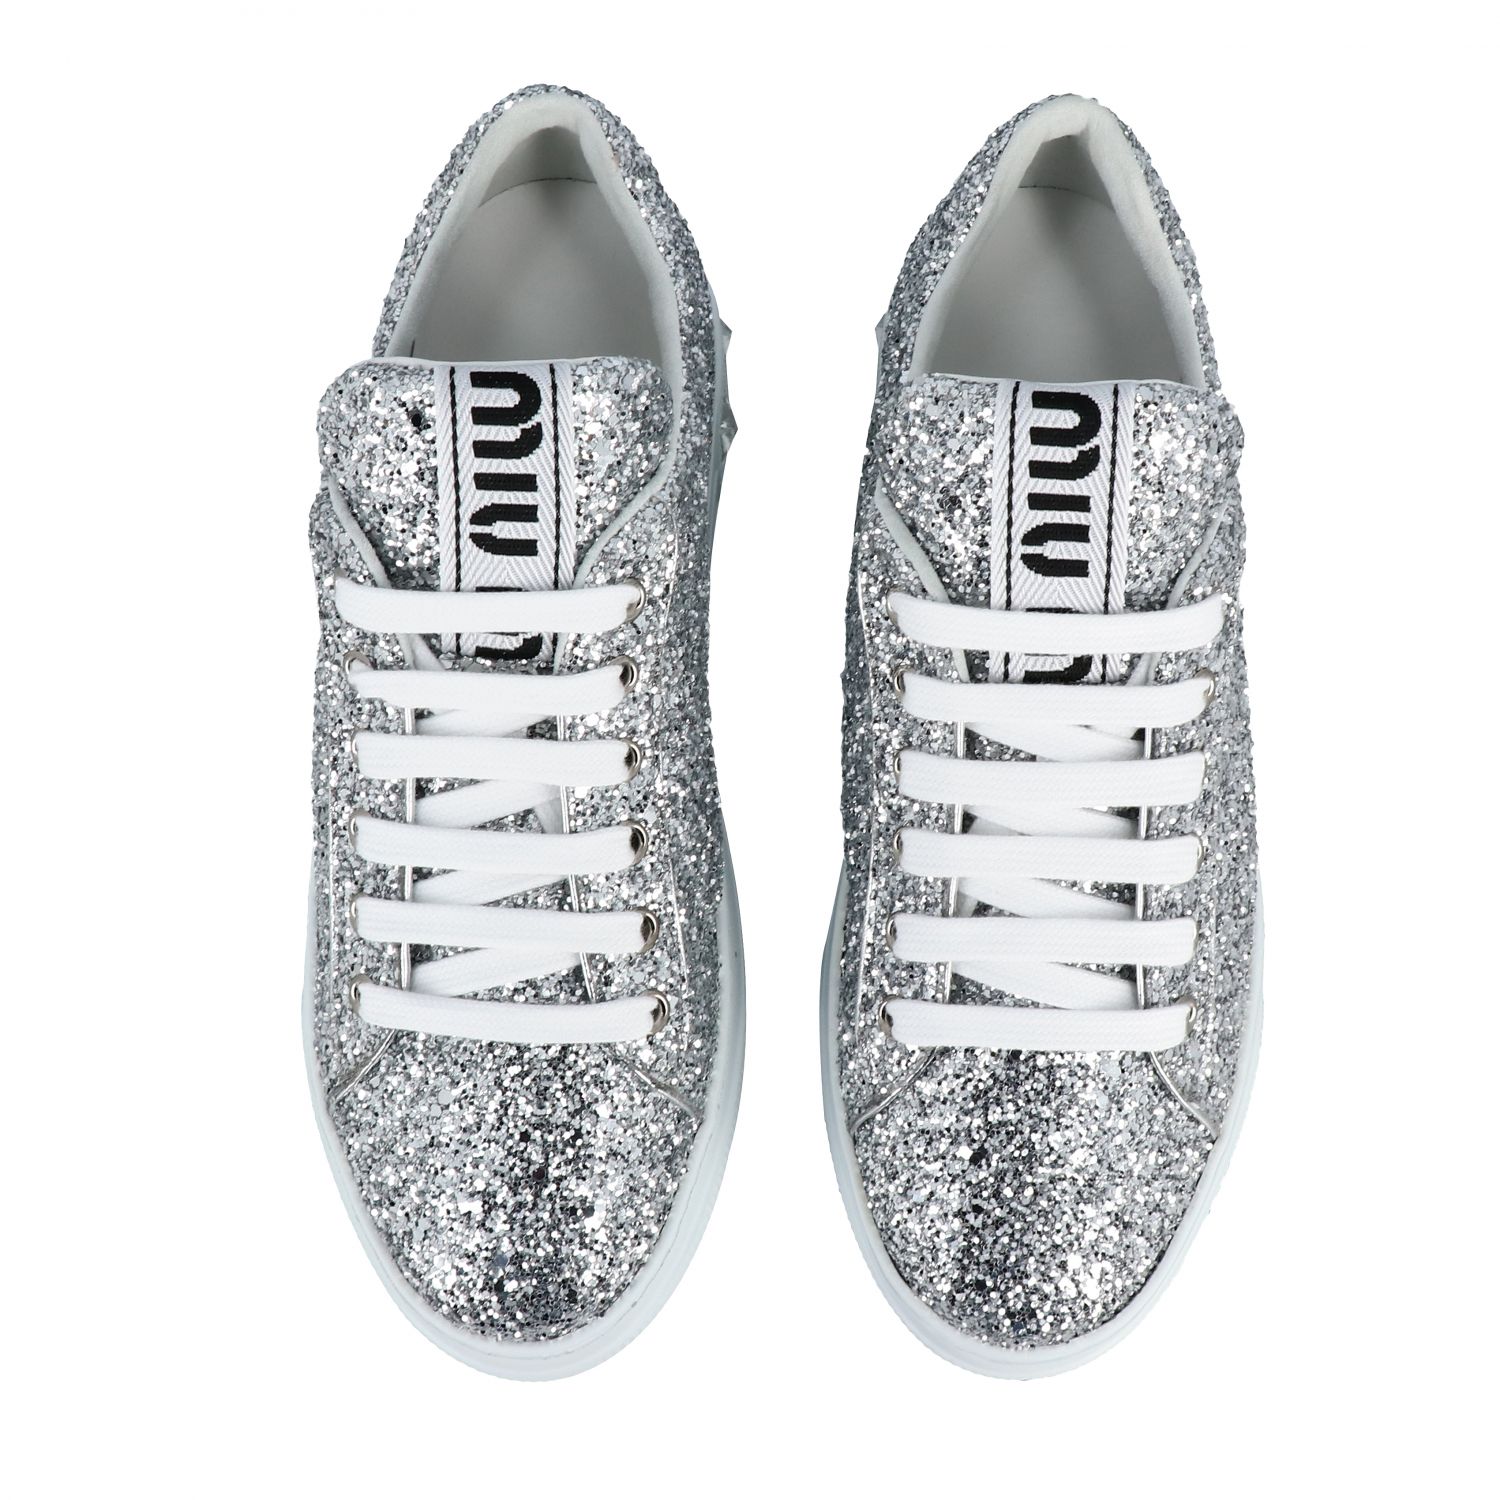 MIU MIU: glitter sneakers with rhinestones and maxi logo - Silver